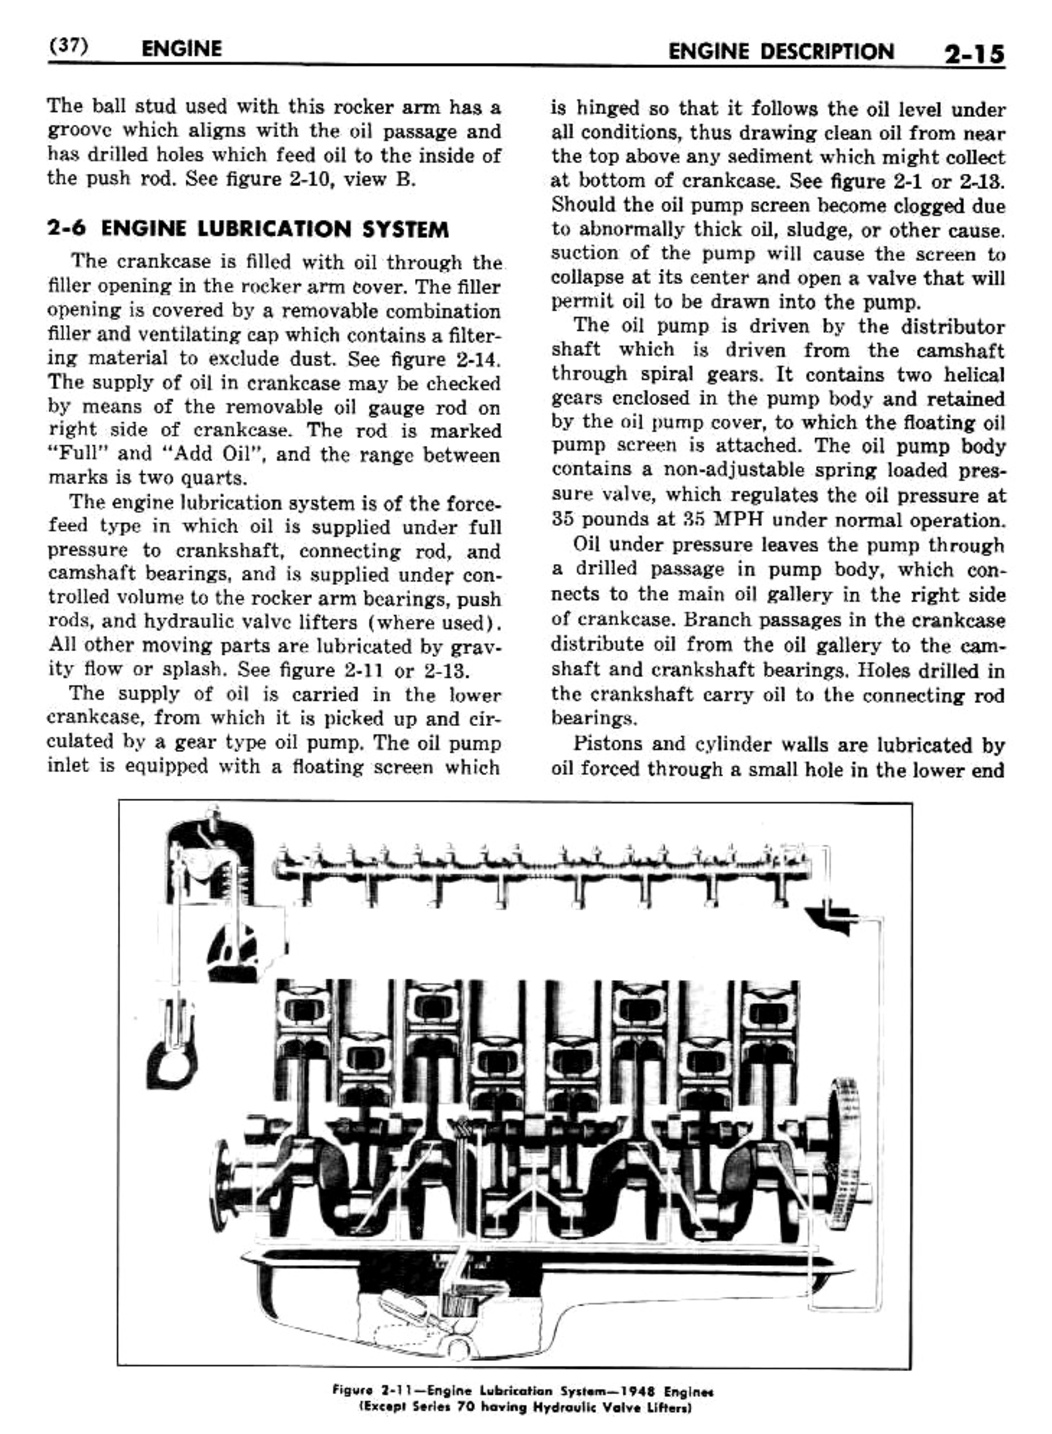 n_03 1948 Buick Shop Manual - Engine-015-015.jpg